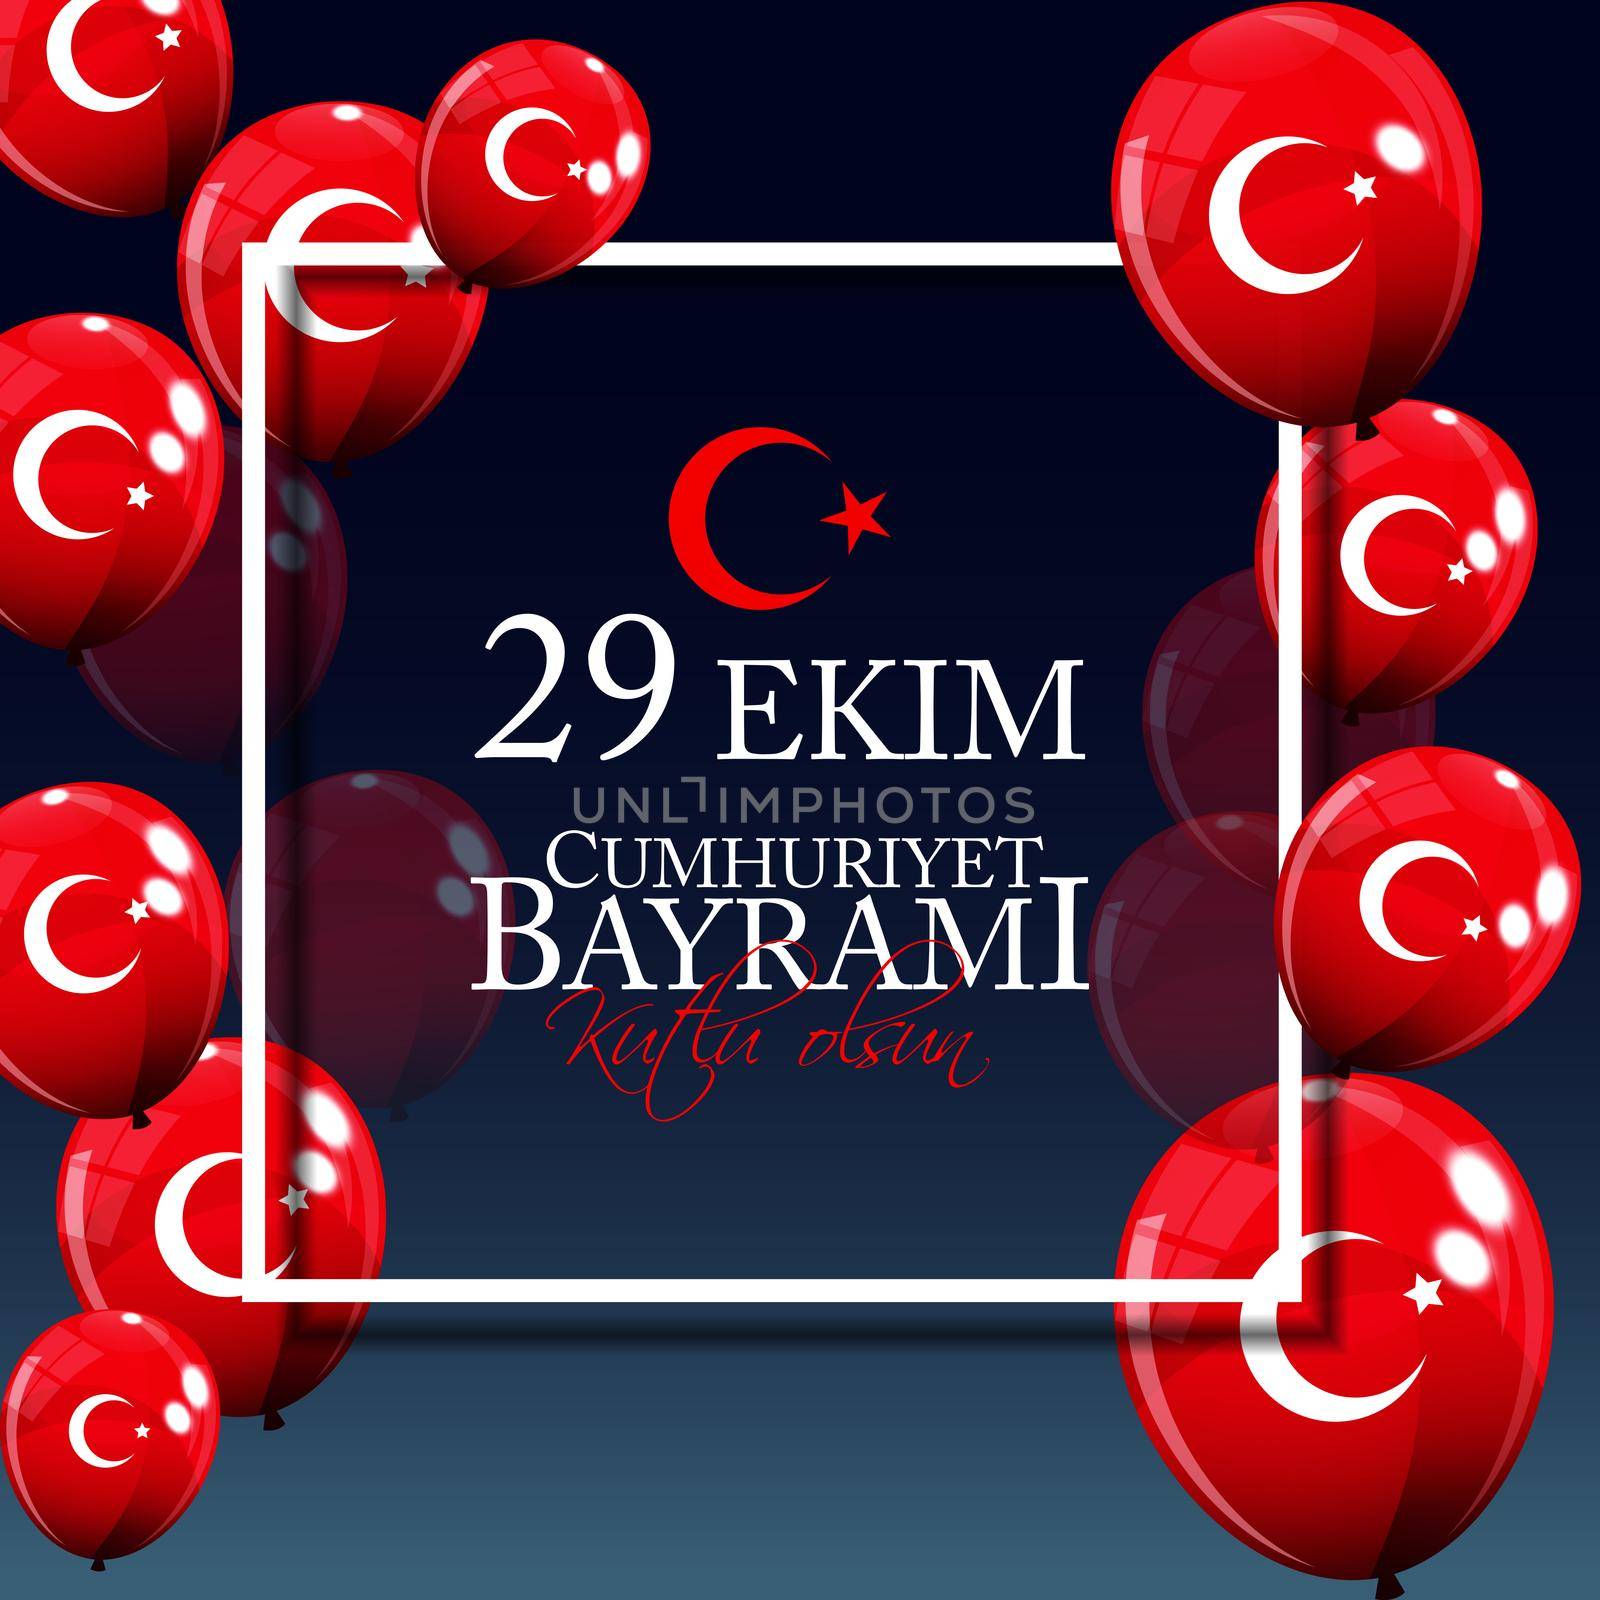 29 Ekim Cumhuriyet Bayrami kutlu olsun. Translation: 29 october Republic Day Turkey and the National Day in Turkey, Happy holiday by yganko